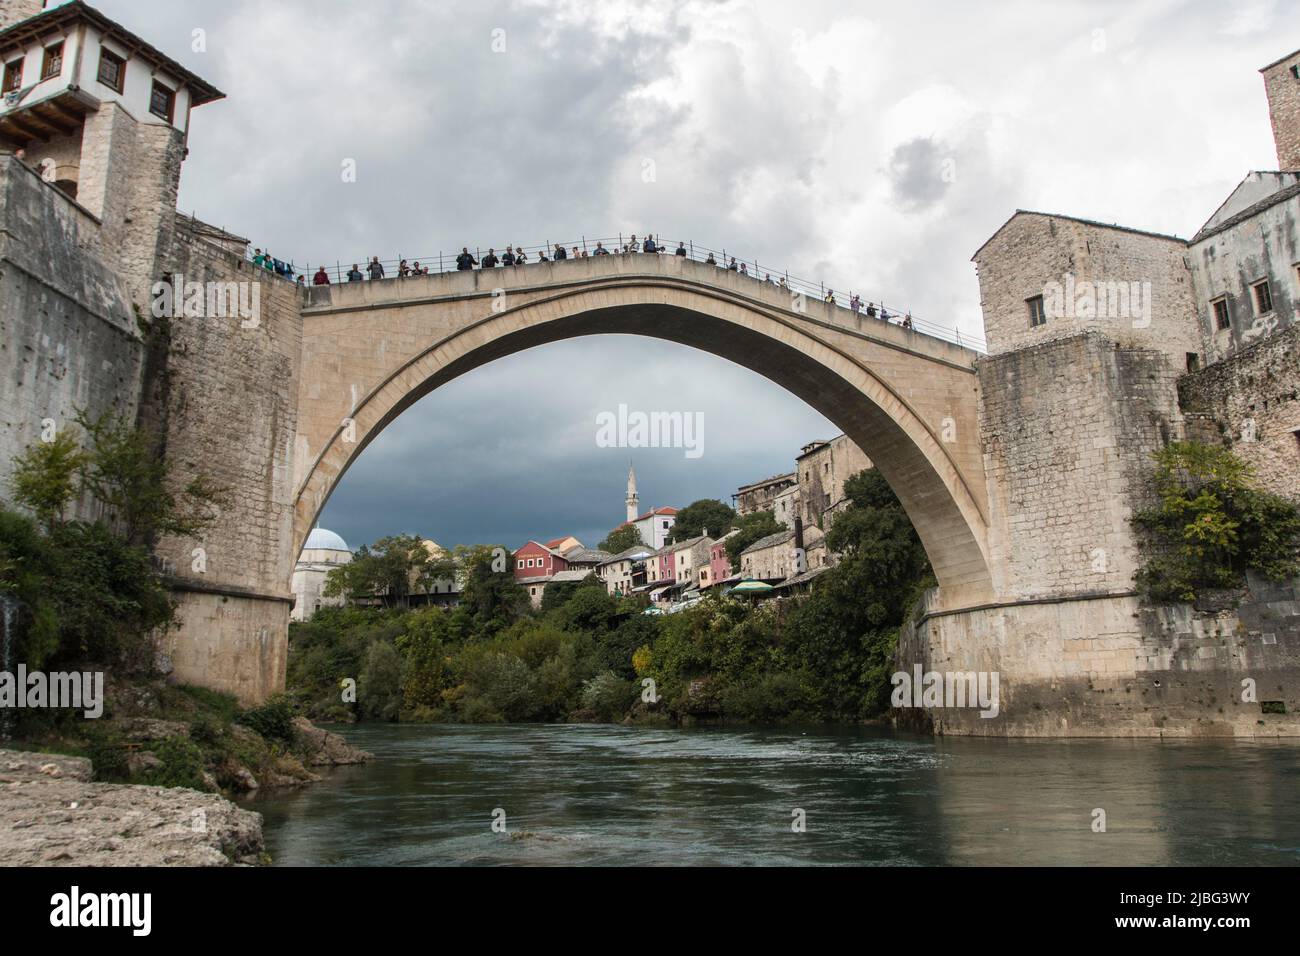 Historical Mostar Bridge known as Stari Most or Old Bridge in Mostar, Bosnia and Herzegovina Stock Photo